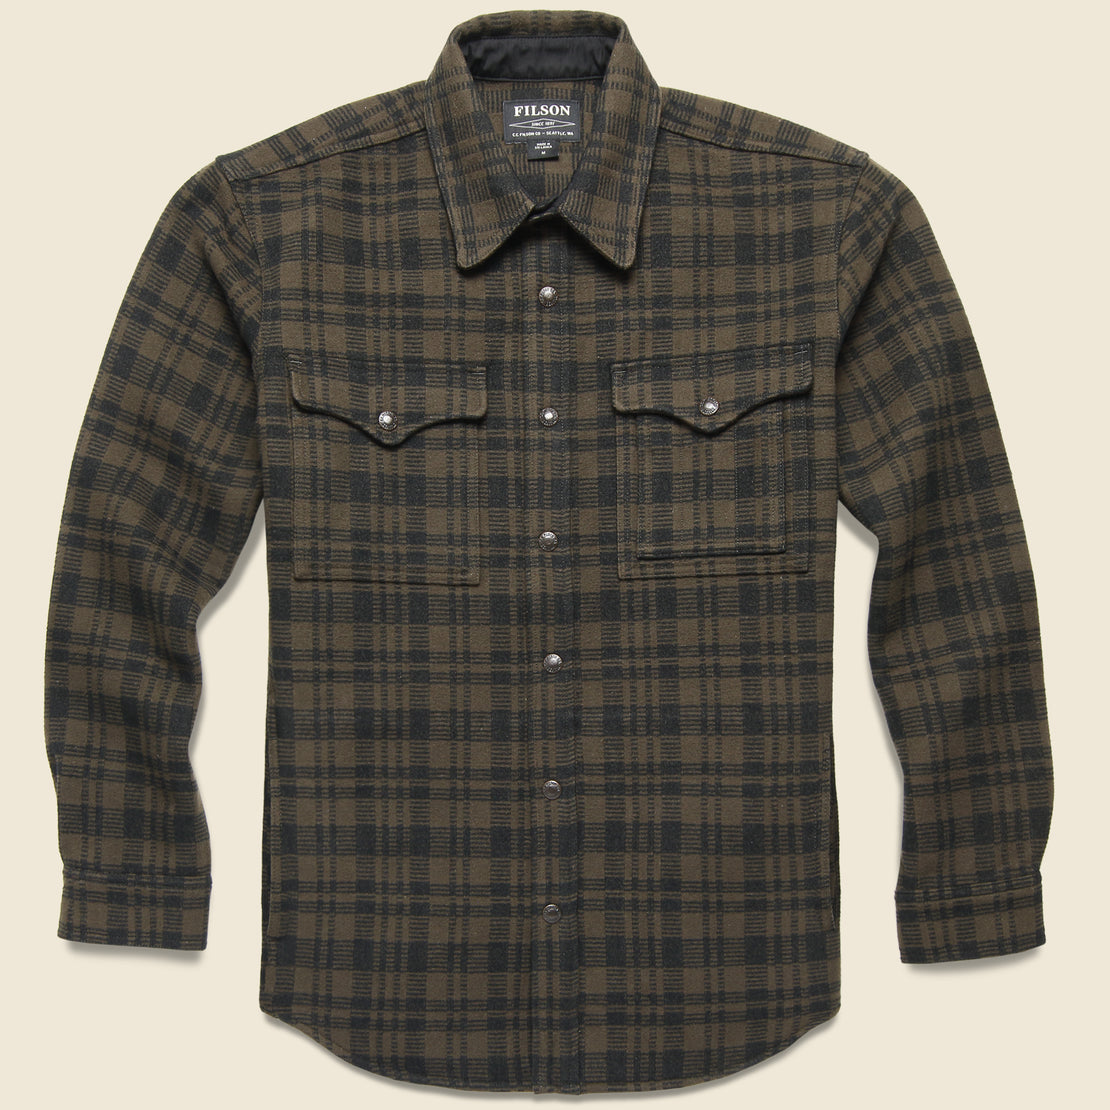 Filson Beartooth Jac Shirt - Dark Brown/Charcoal